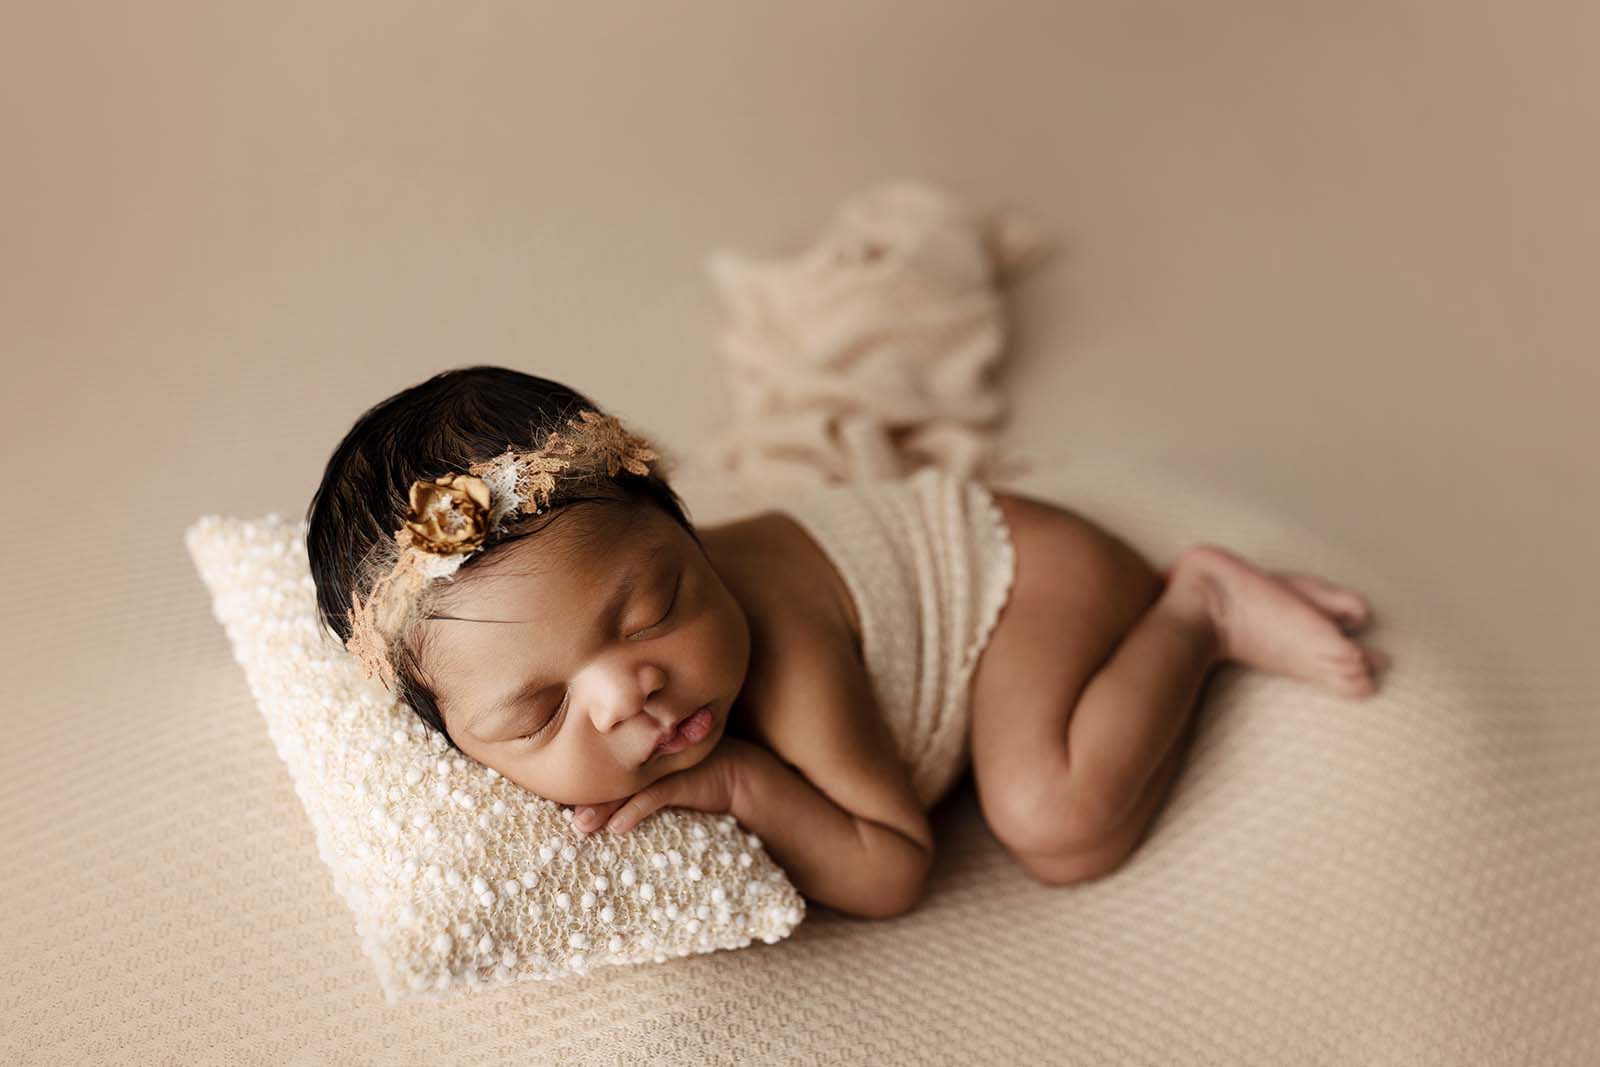 newborn photography Maryland, professional newborn photos, get newborn pictures taken in Maryland